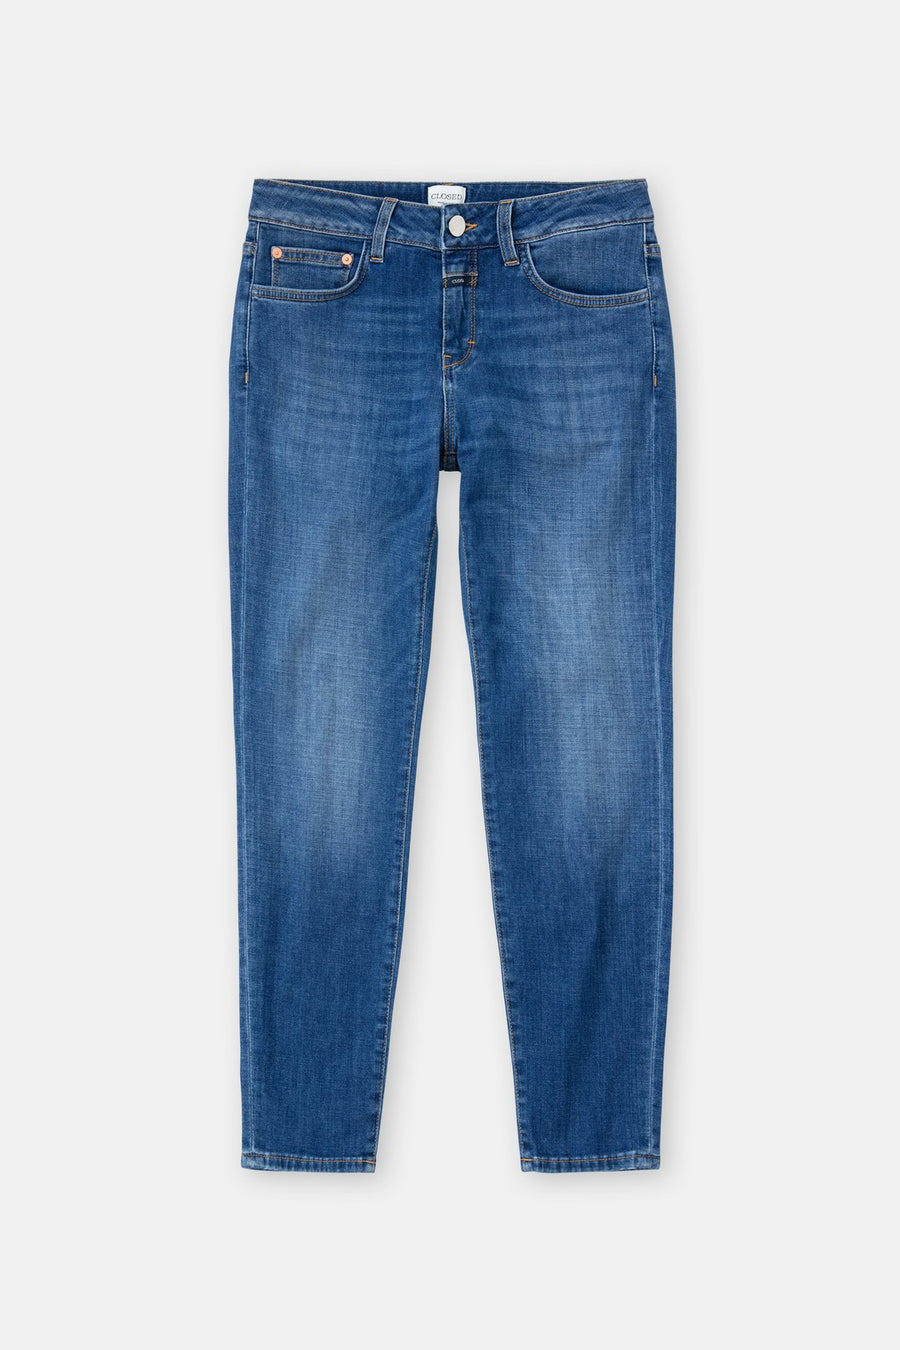 Jeans Baker C22833-03p-3w Dark-Blue